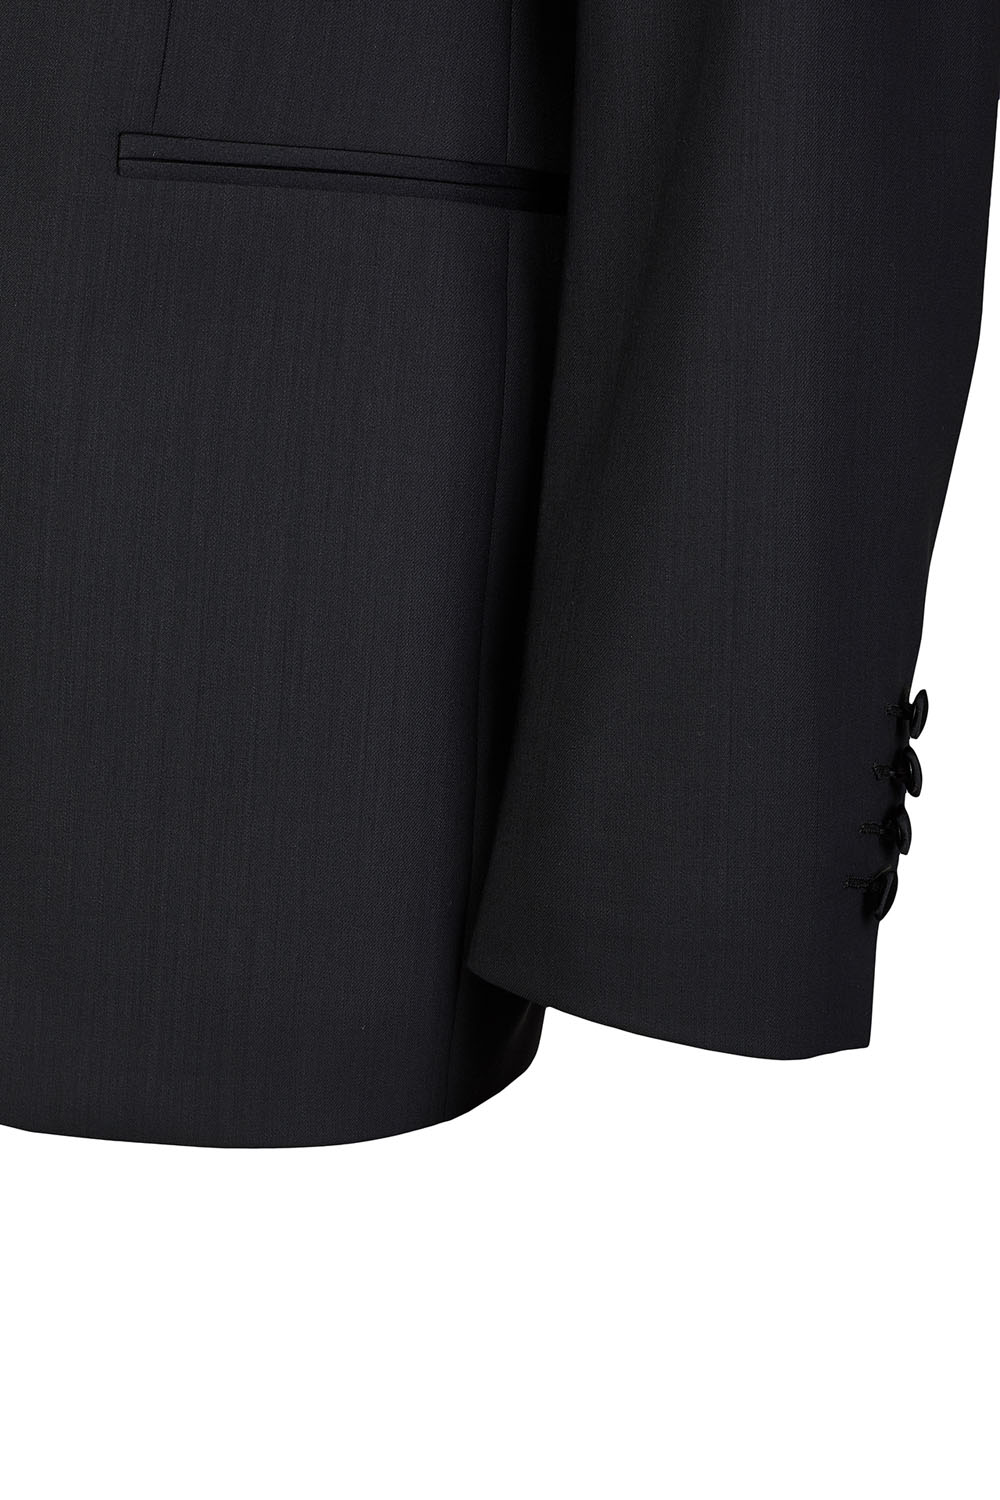 Black Smoking Classic line Tuxedo - Tom Murphy's Formal and Menswear